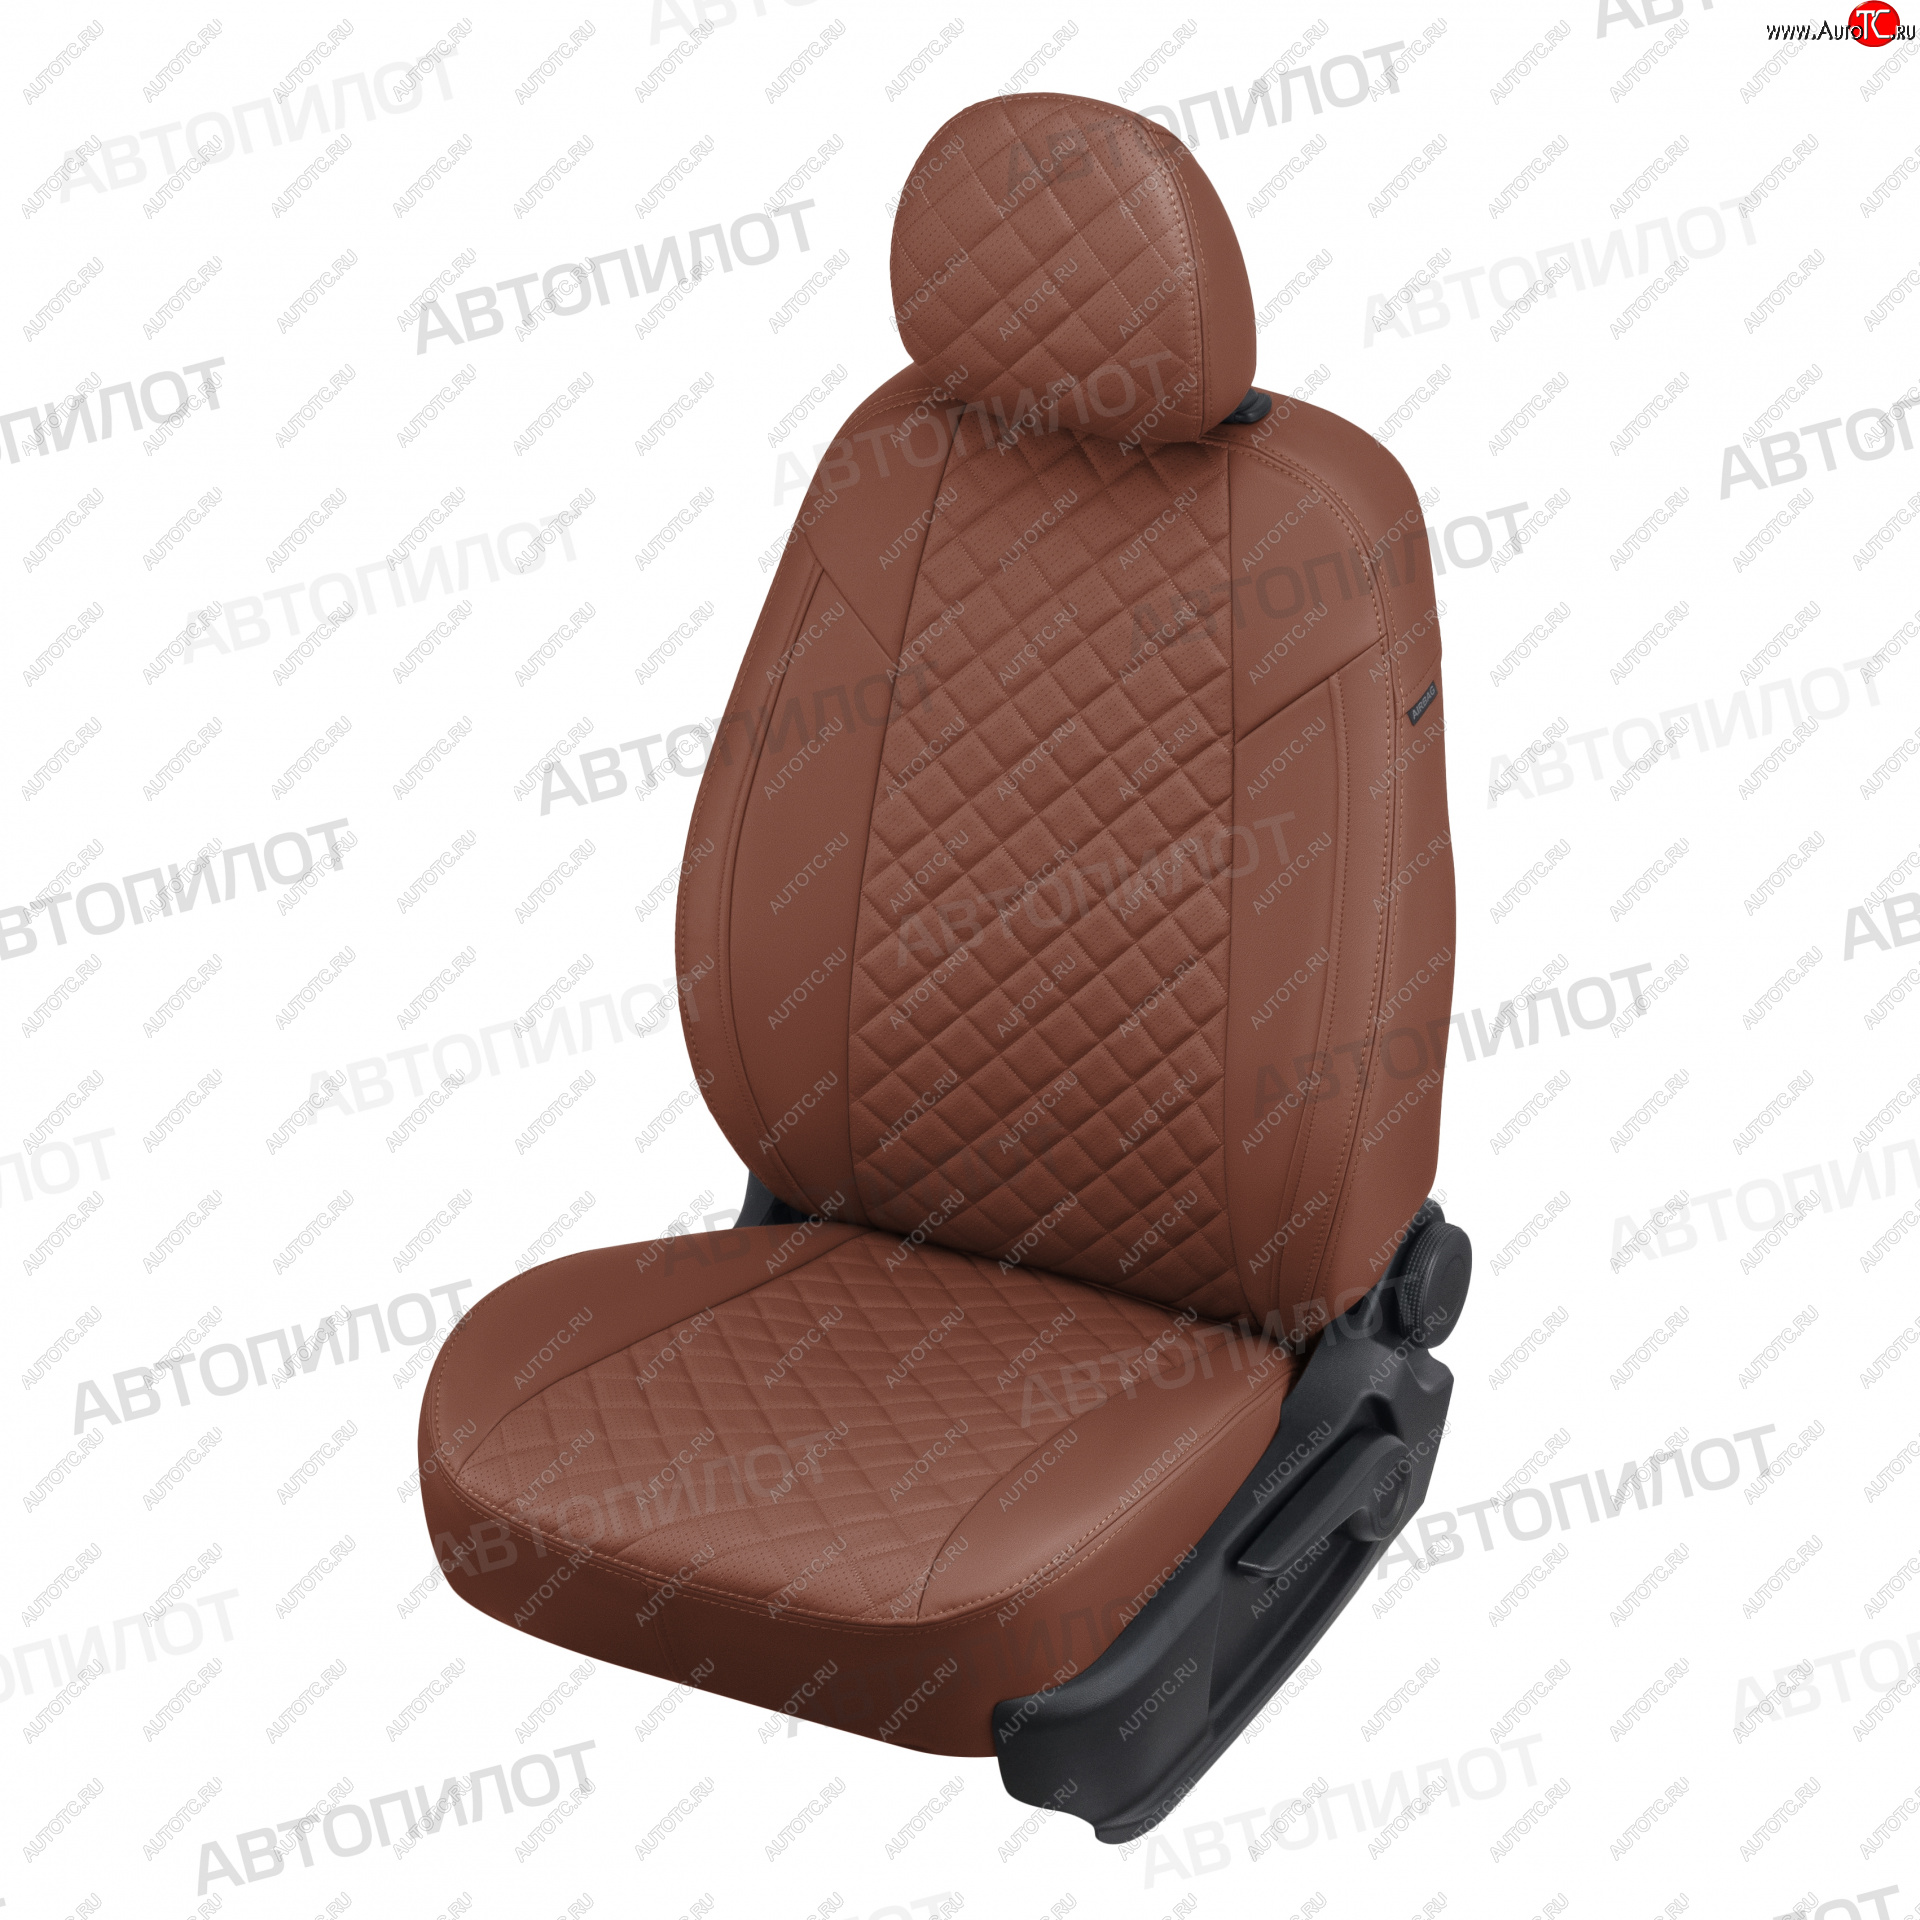 7 599 р. Чехлы сидений (экокожа) Автопилот Ромб  KIA Soul  2 PS (2014-2019) (коричневый)